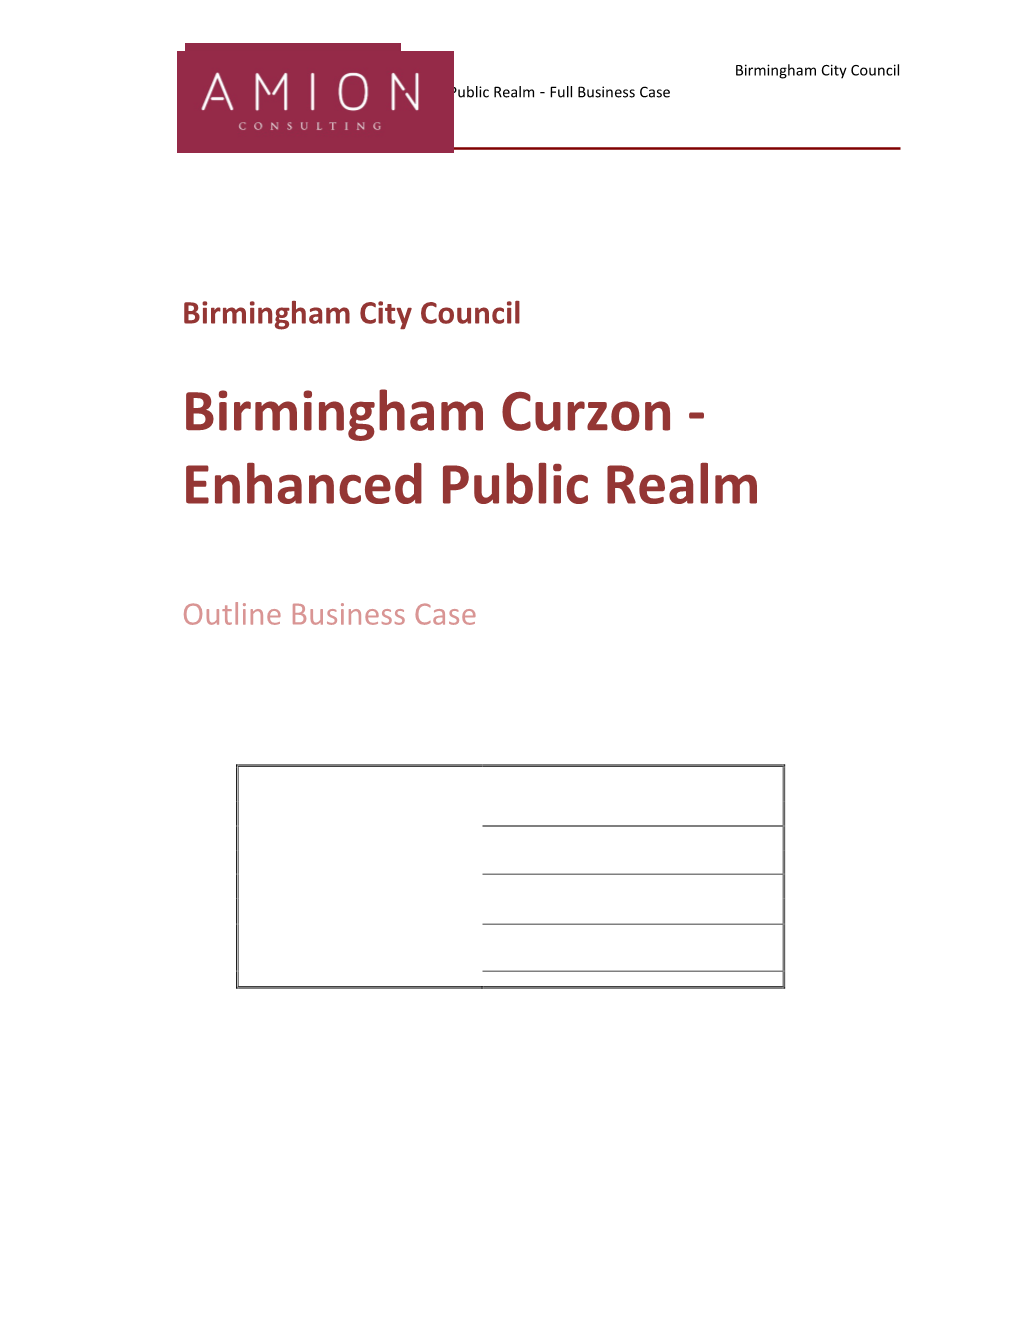 Birmingham Curzon - Enhanced Public Realm - Full Business Case